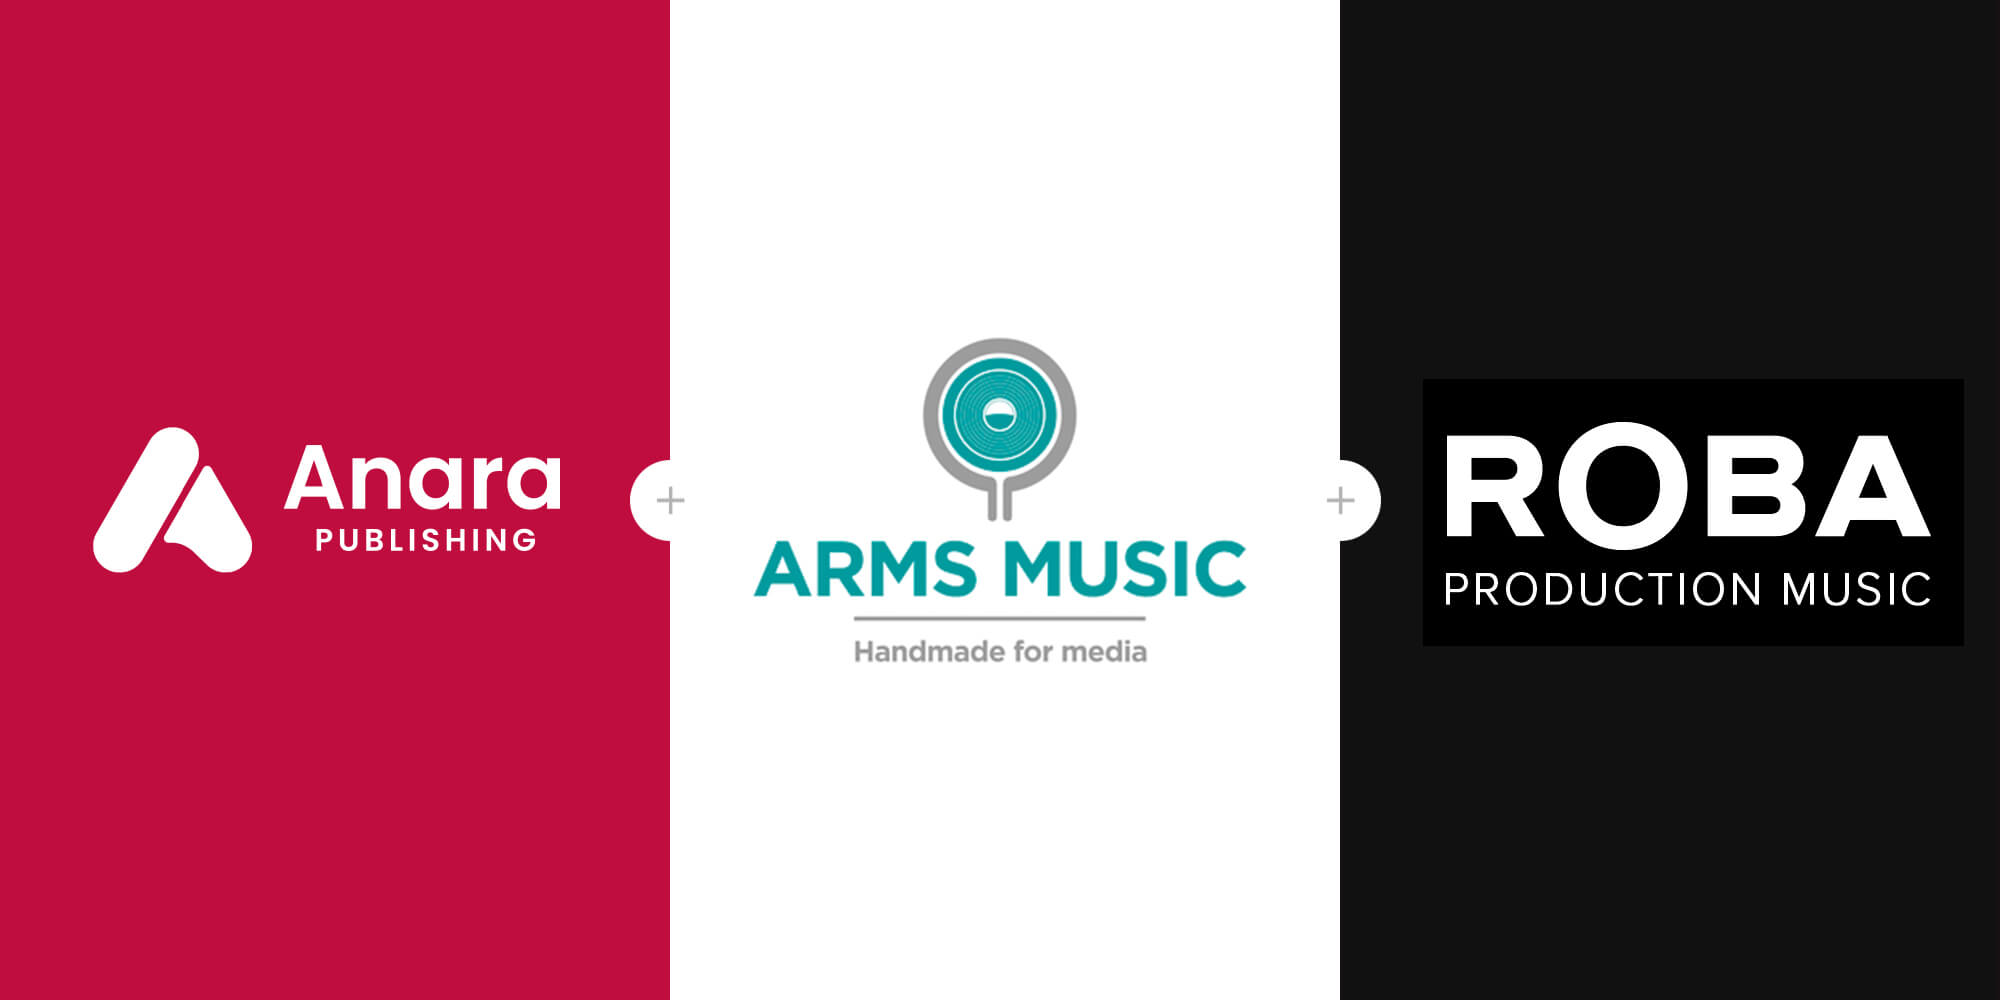 Anara Publishing Arms Production Music ROBA Production Music